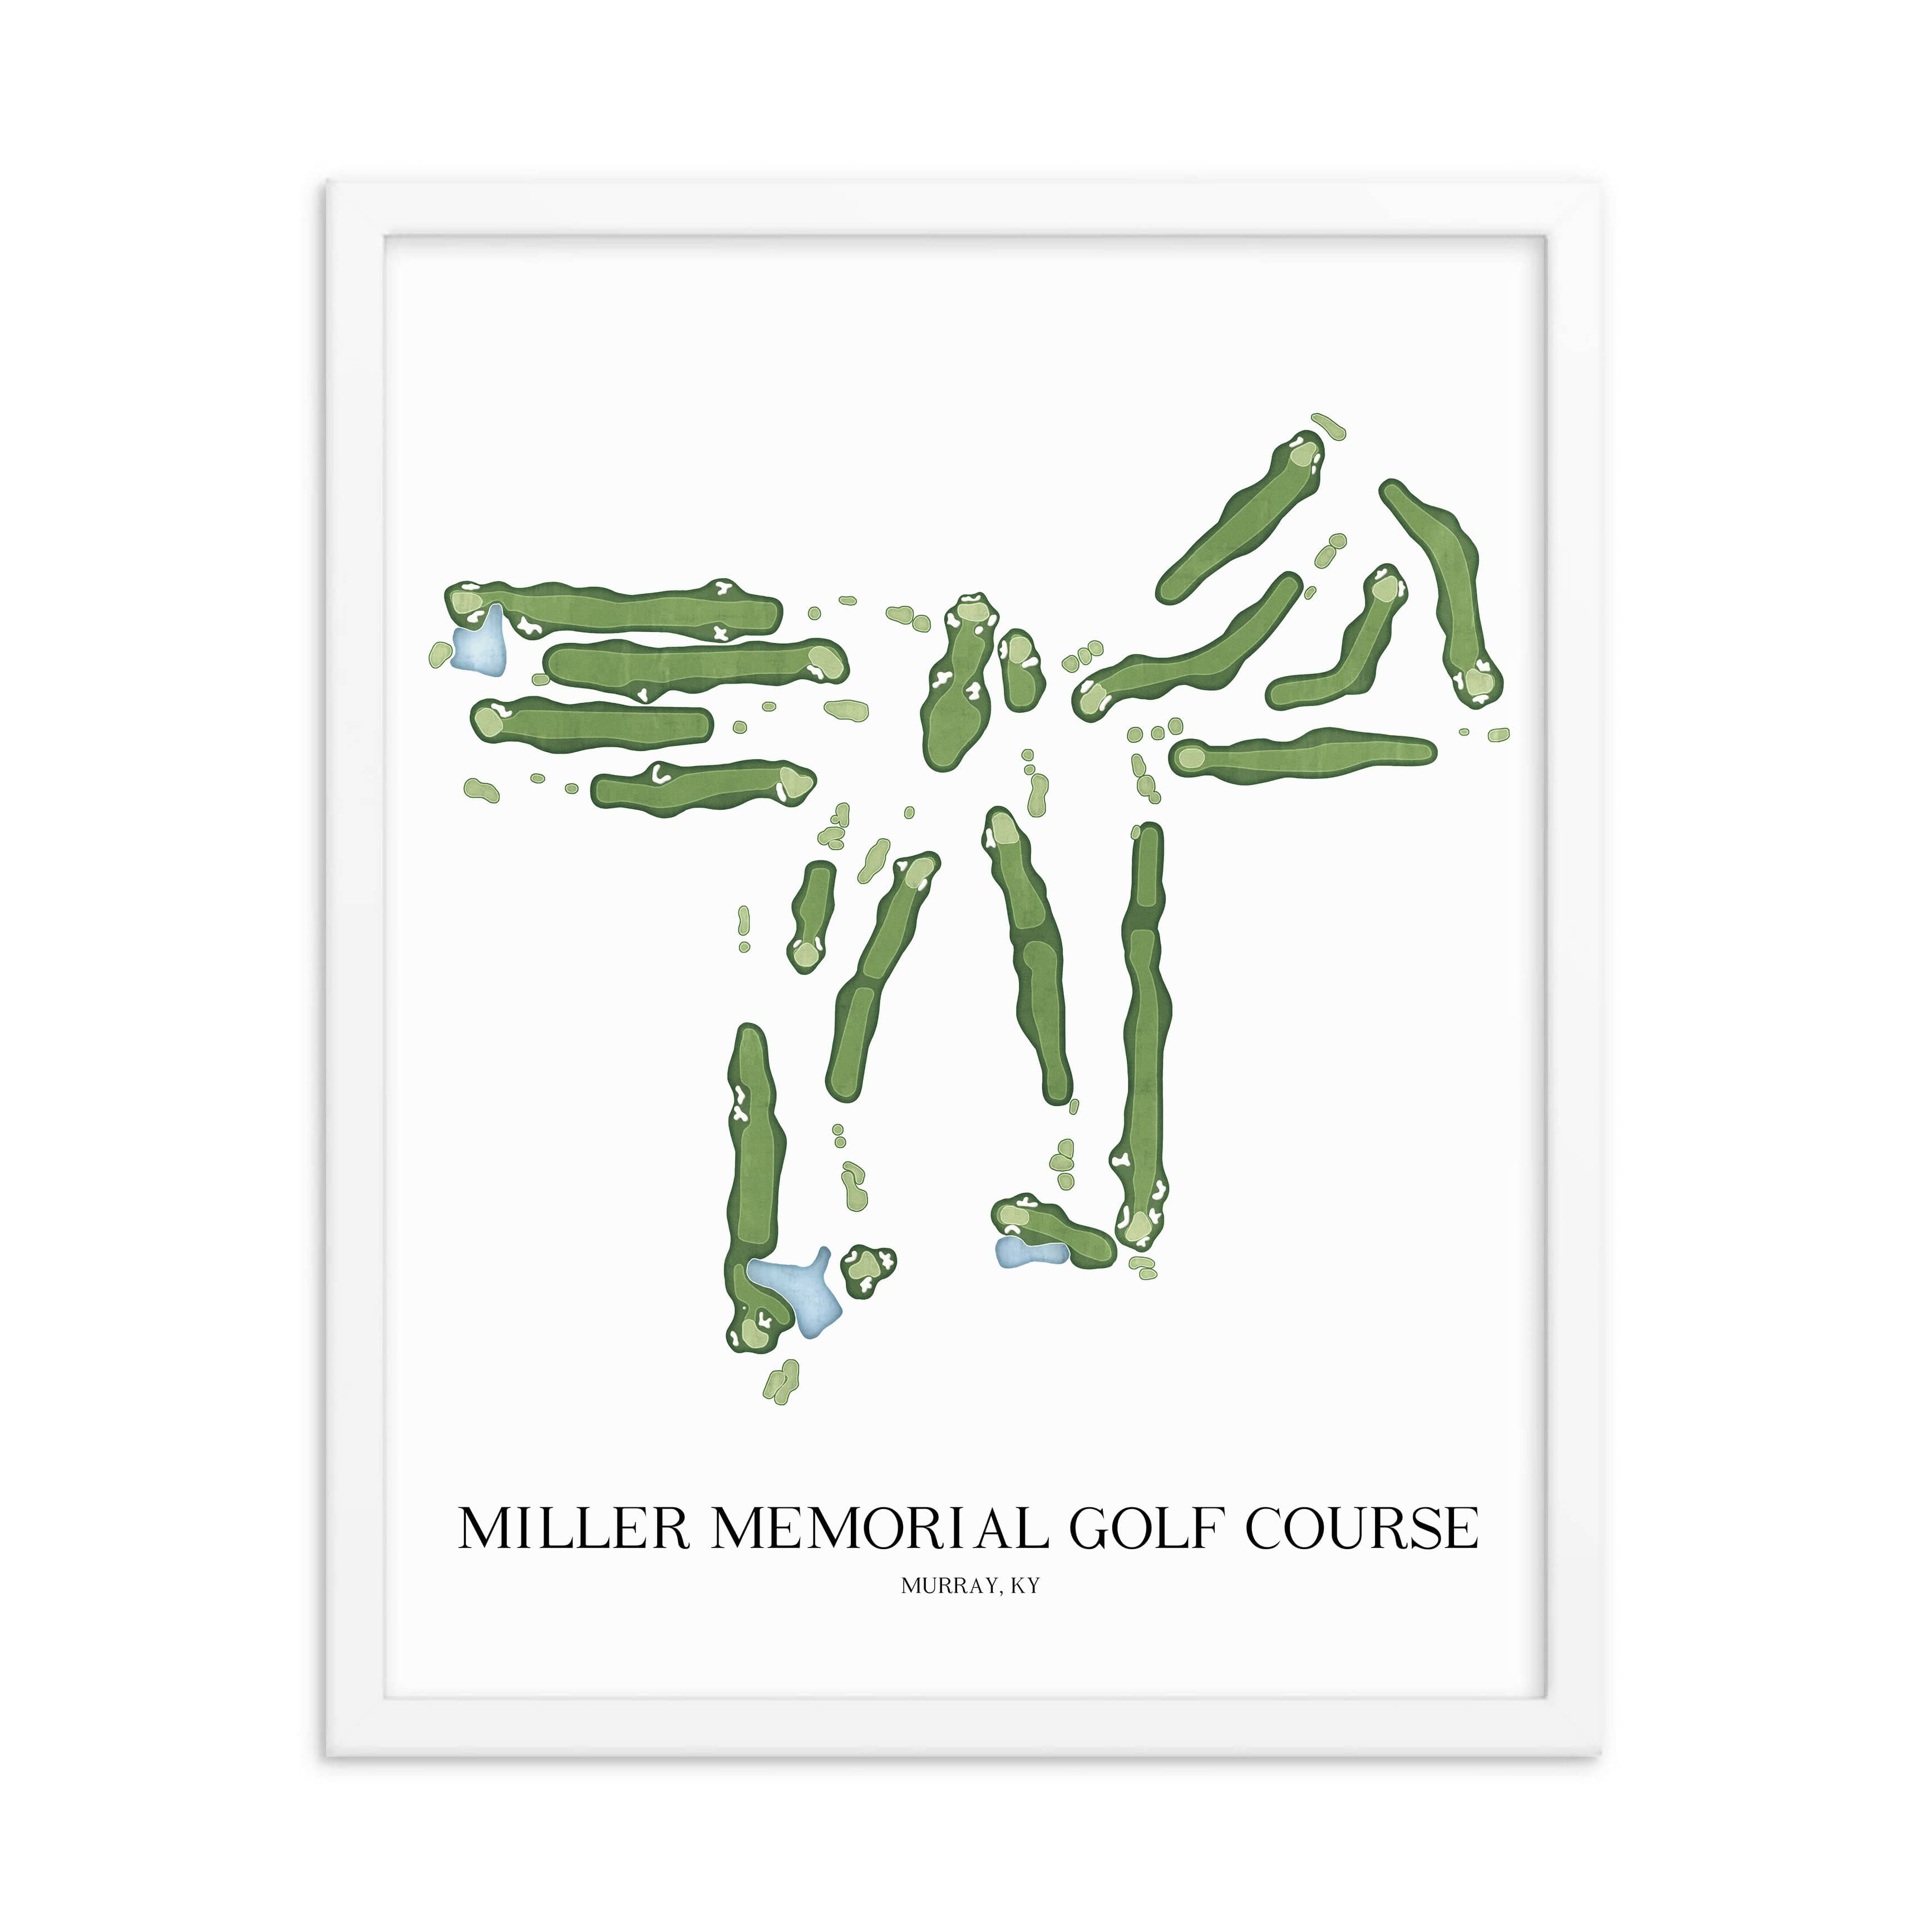 The 19th Hole Golf Shop - Golf Course Prints -  Miller Memorial Golf Course Golf Course Map